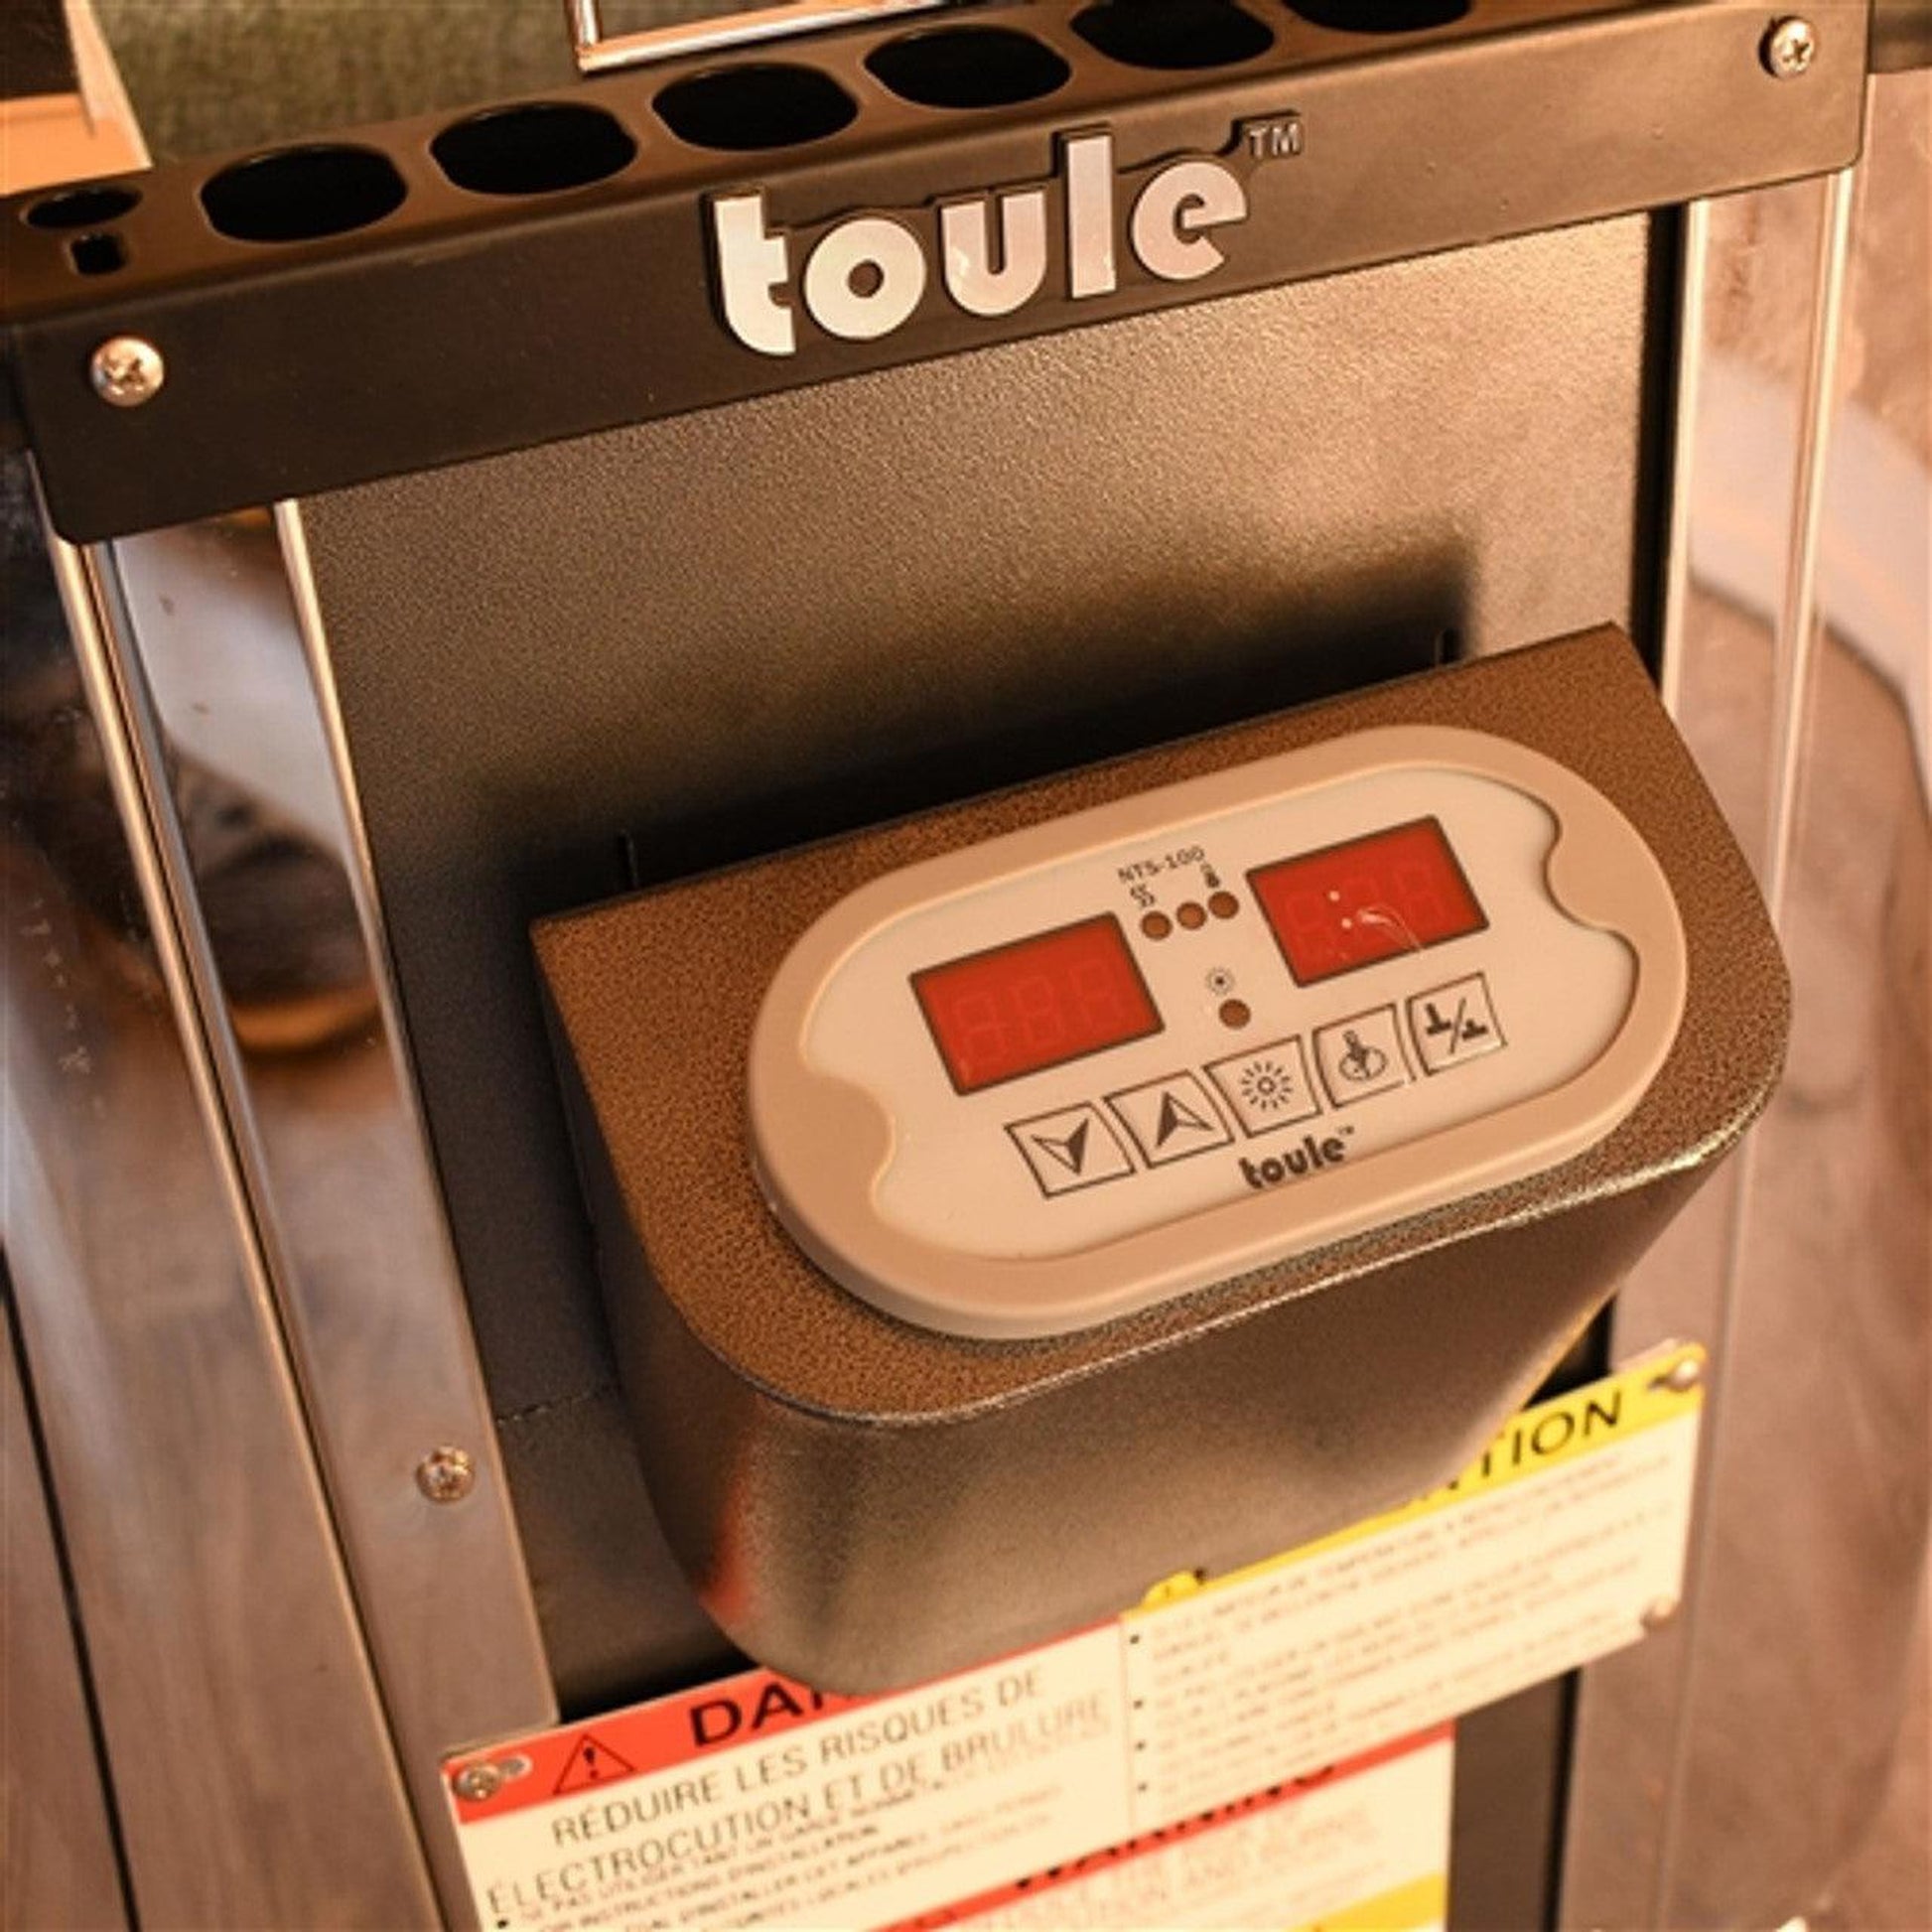 Aleko Toule ETL 9 kW Wet Dry Sauna Heater Stove With Digital Controller